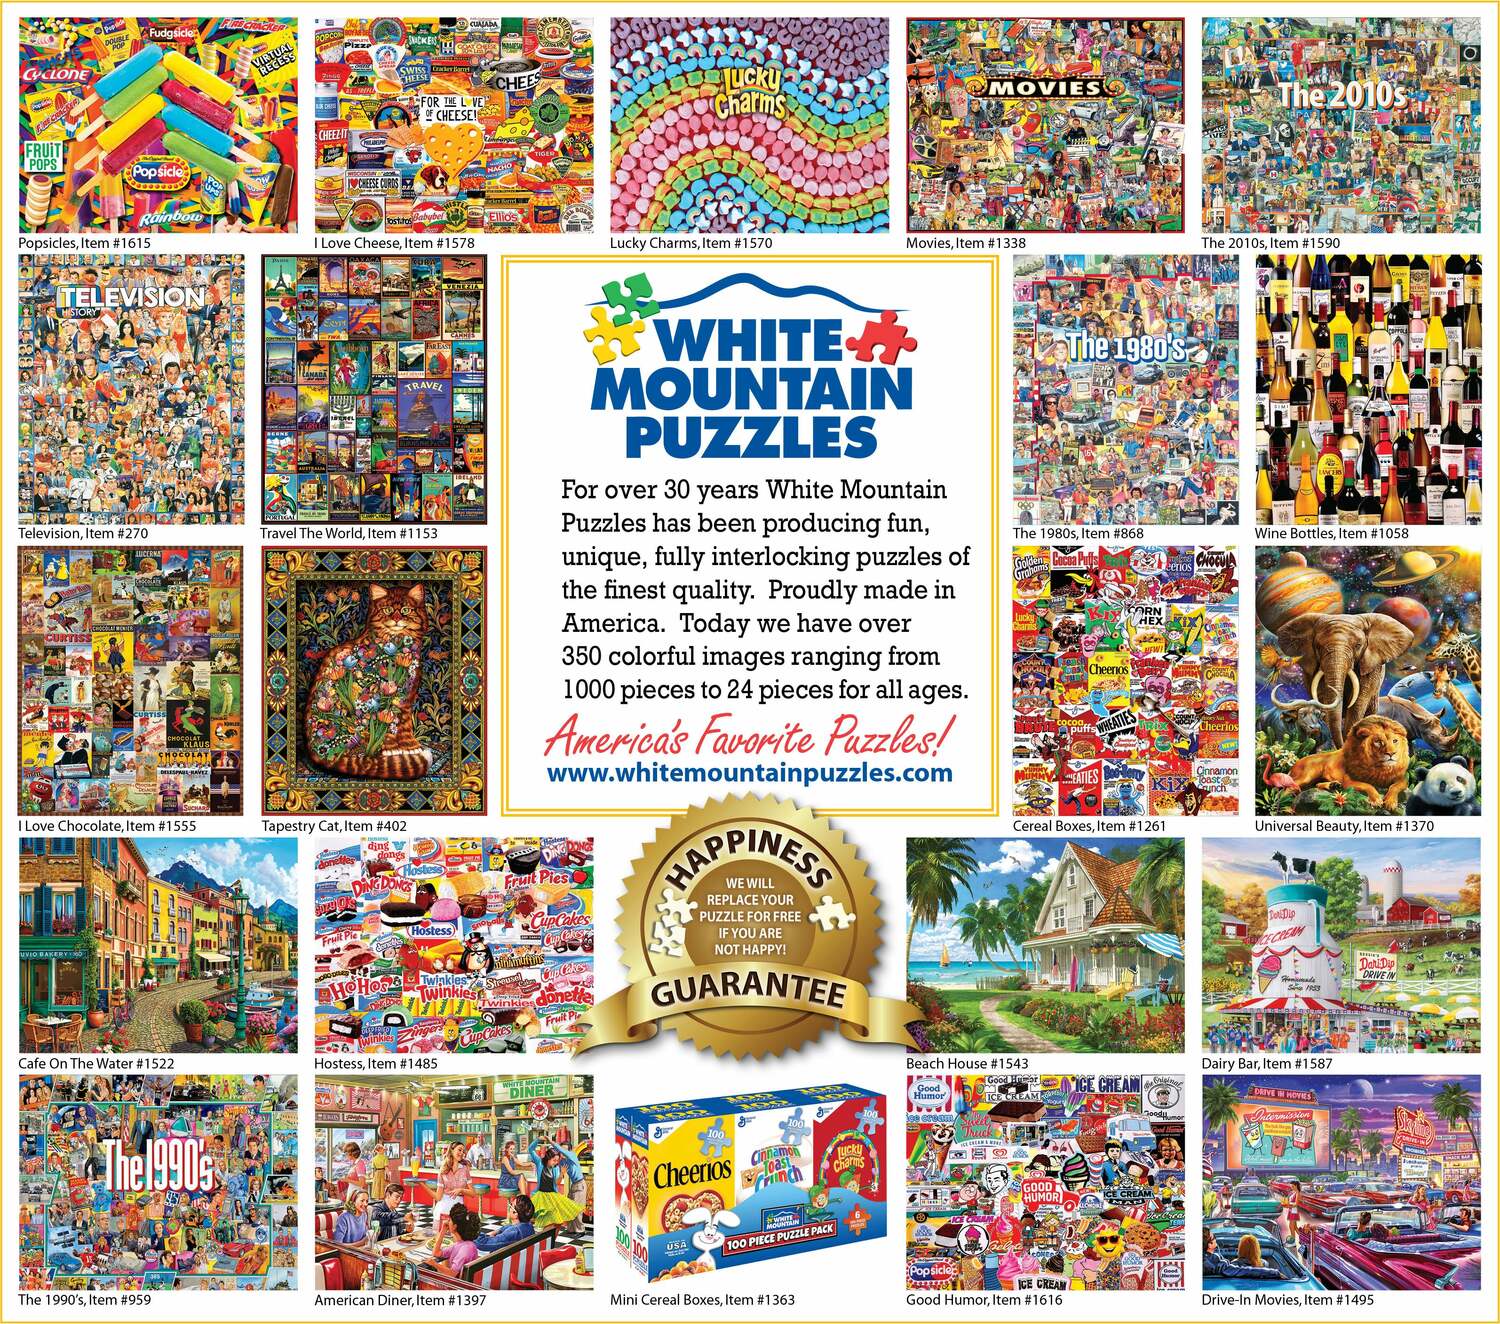 Mom's Shopping List - 1000 Piece Jigsaw Puzzle